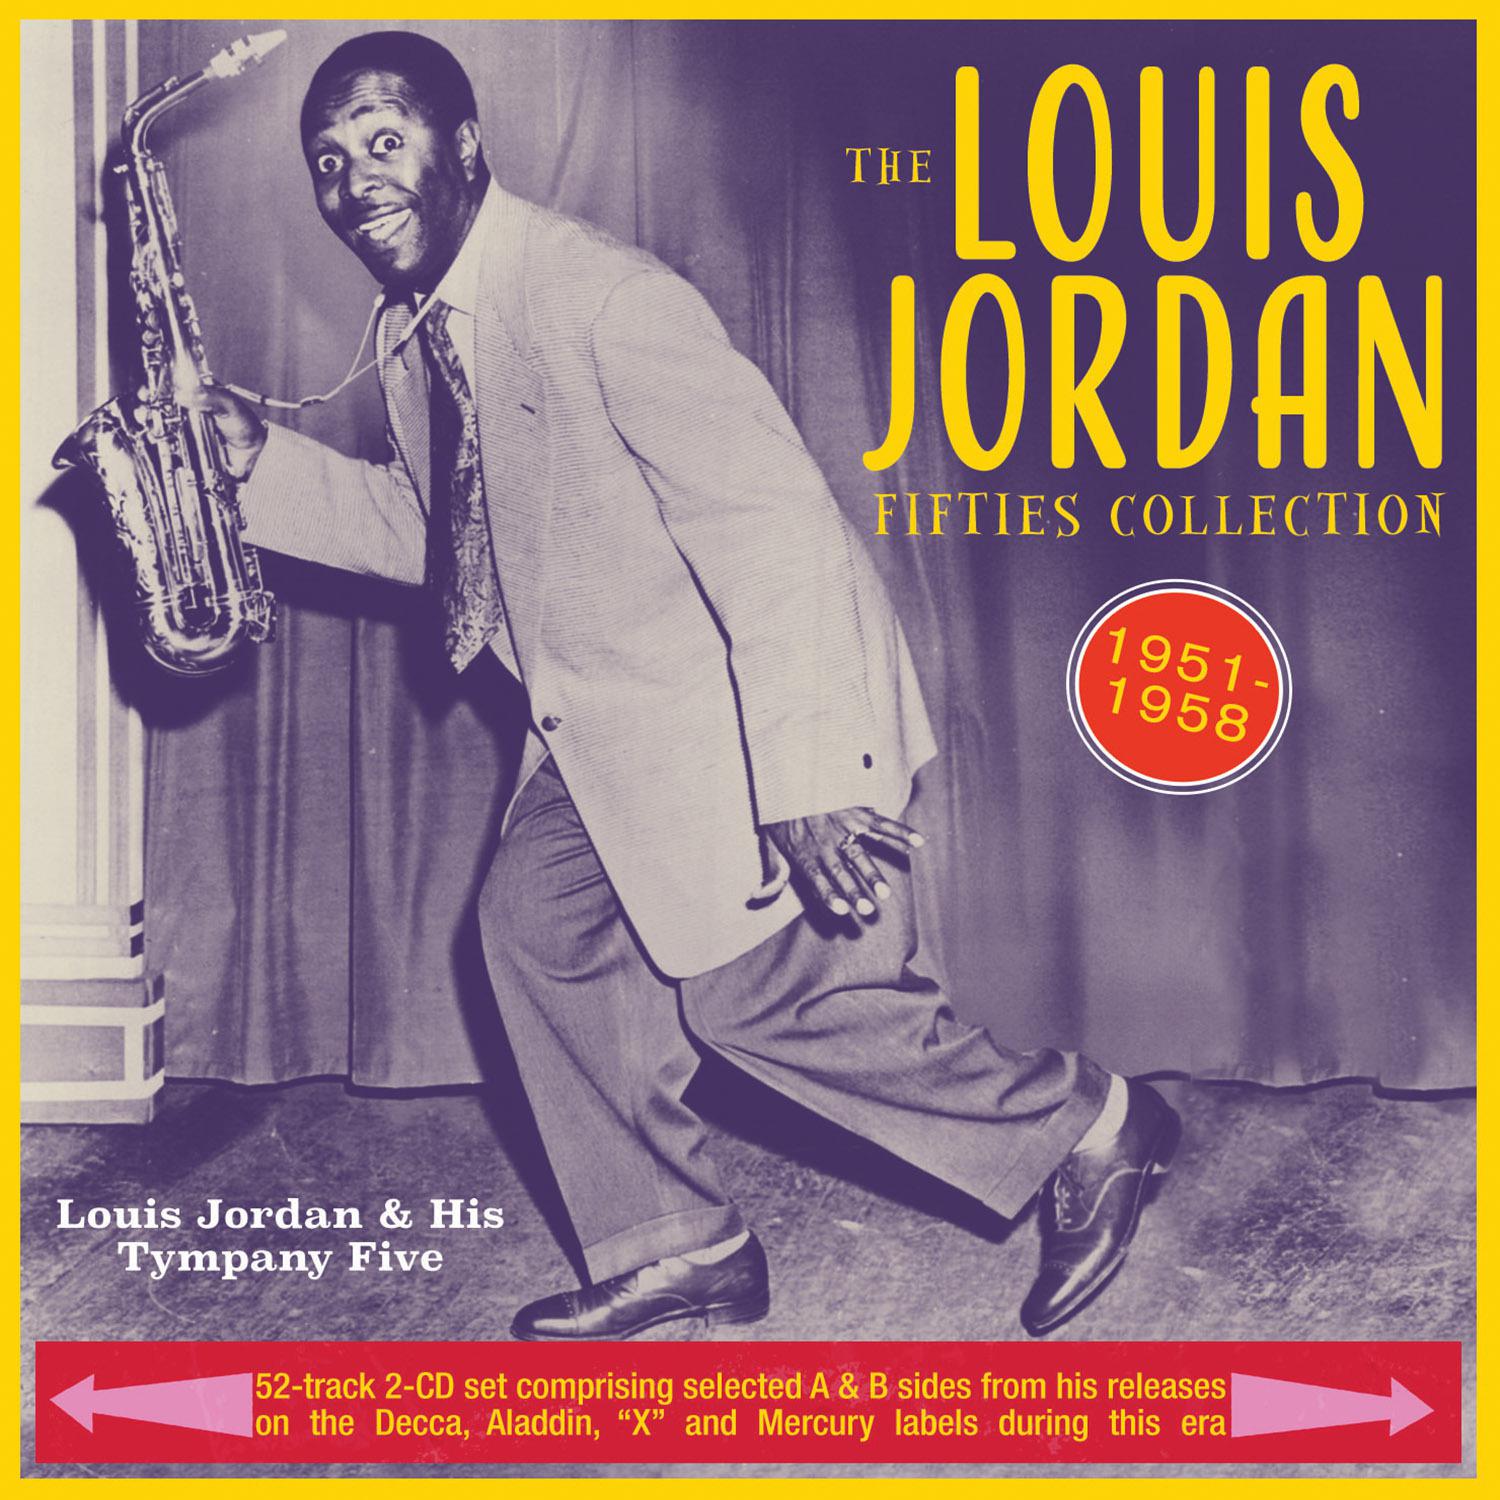 Louis Jordan and his Tympany Five - All Of Me